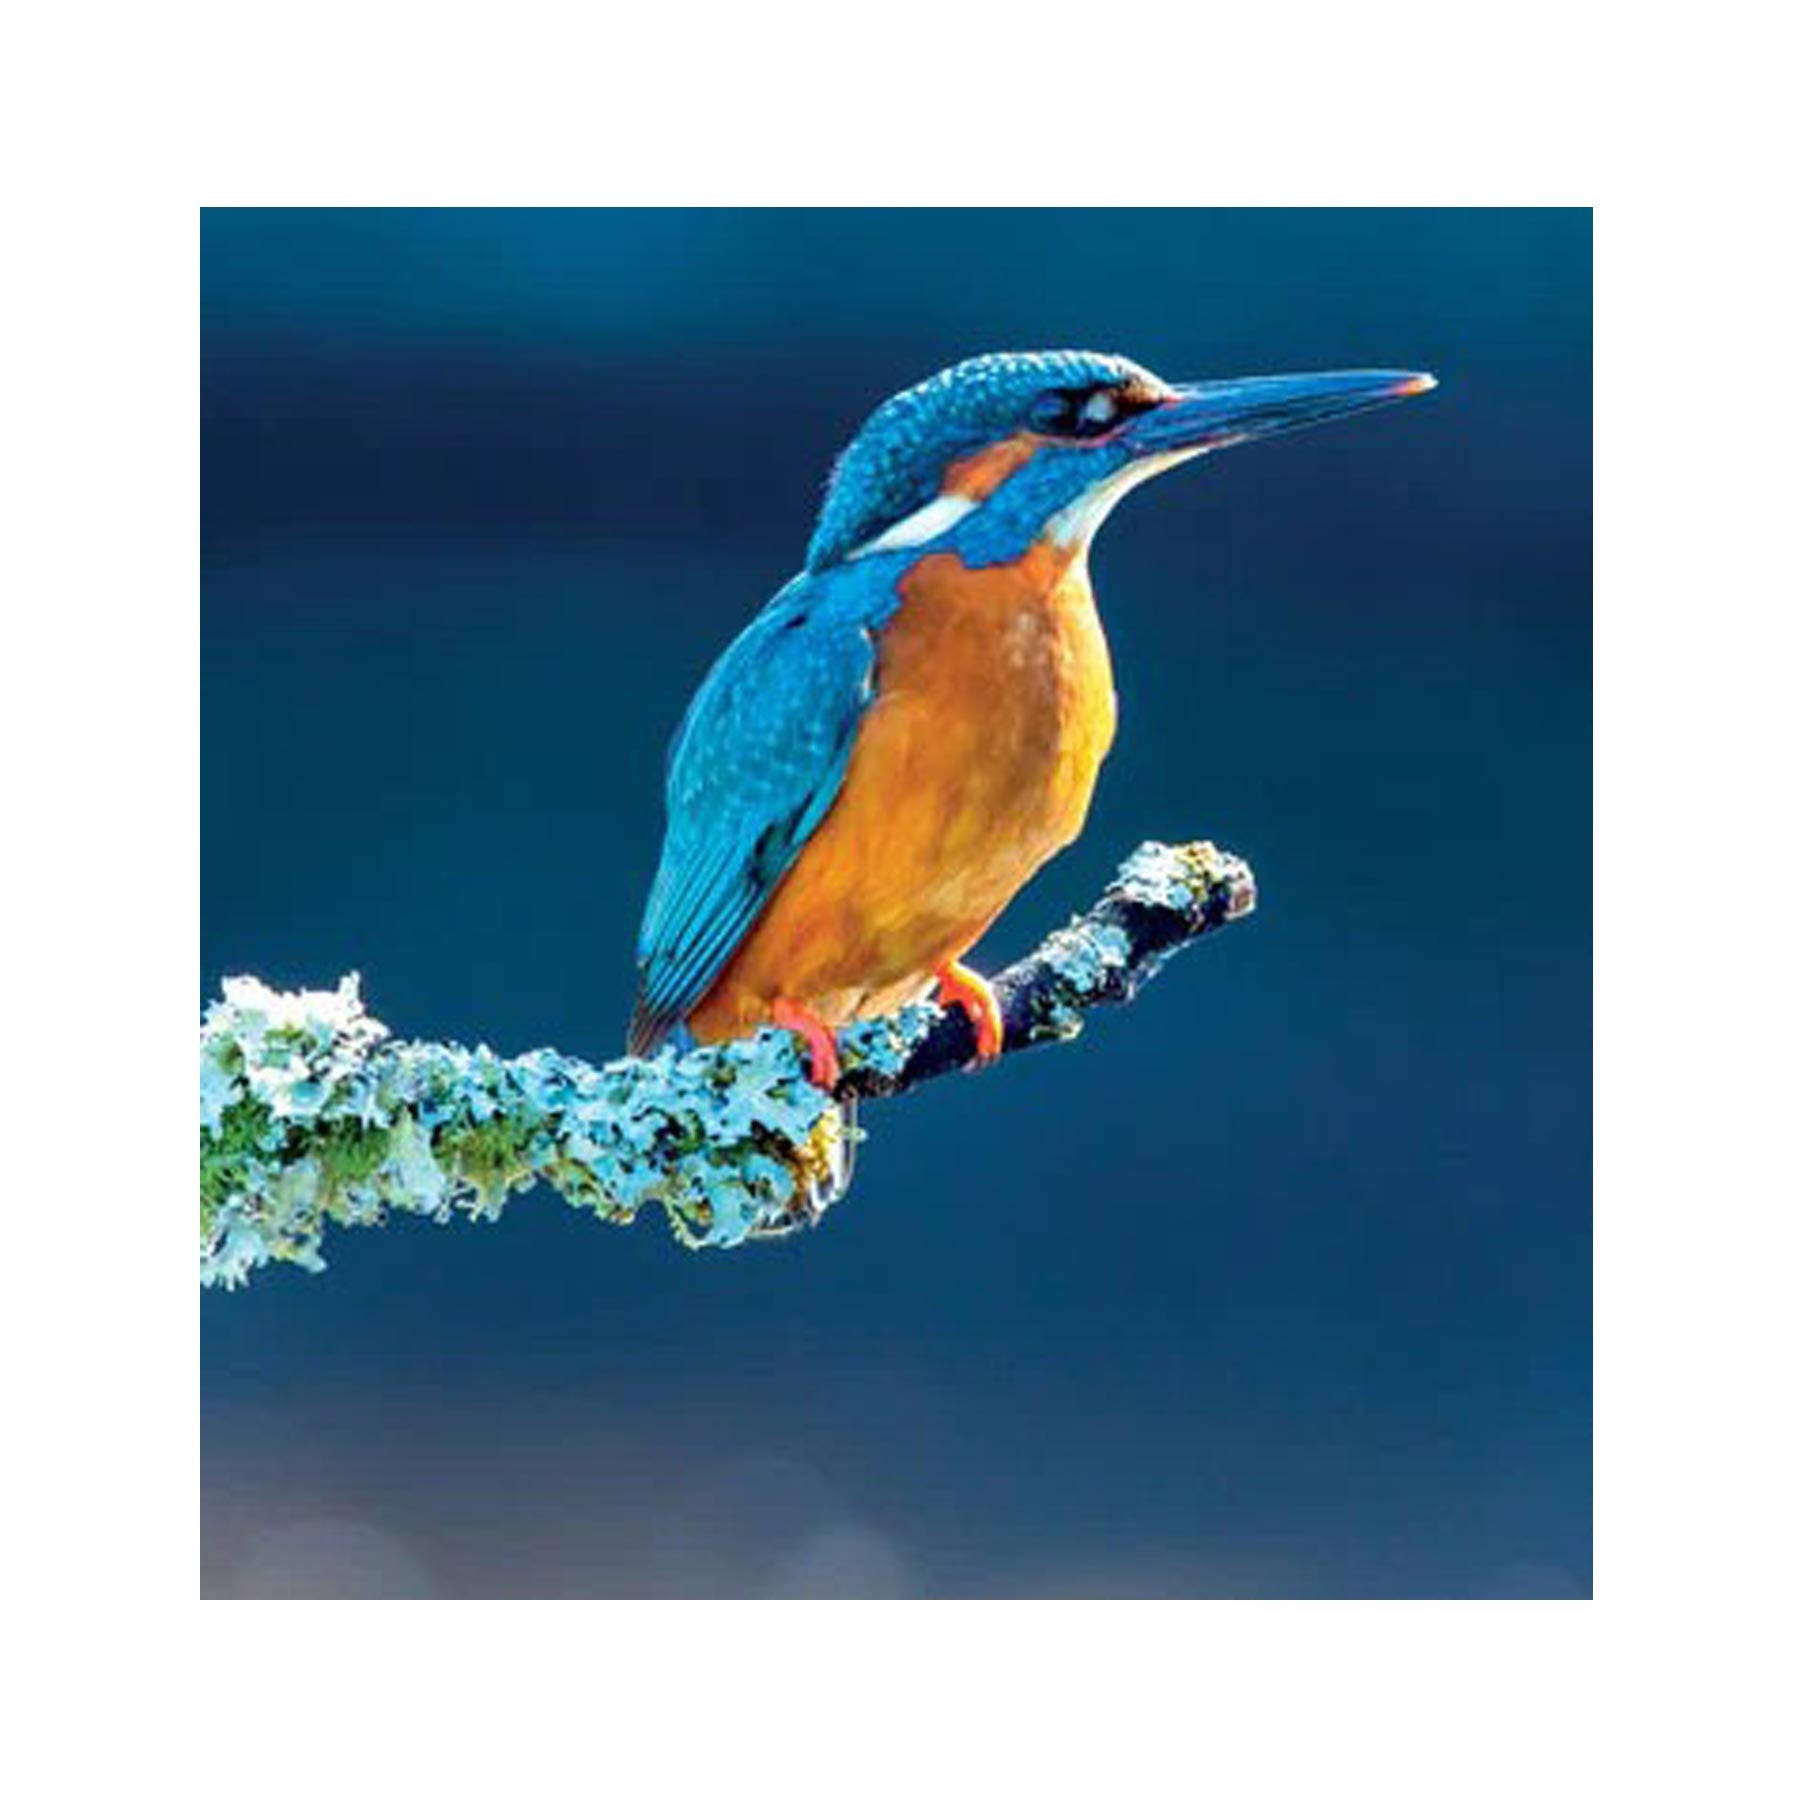 Common kingfisher greetings card